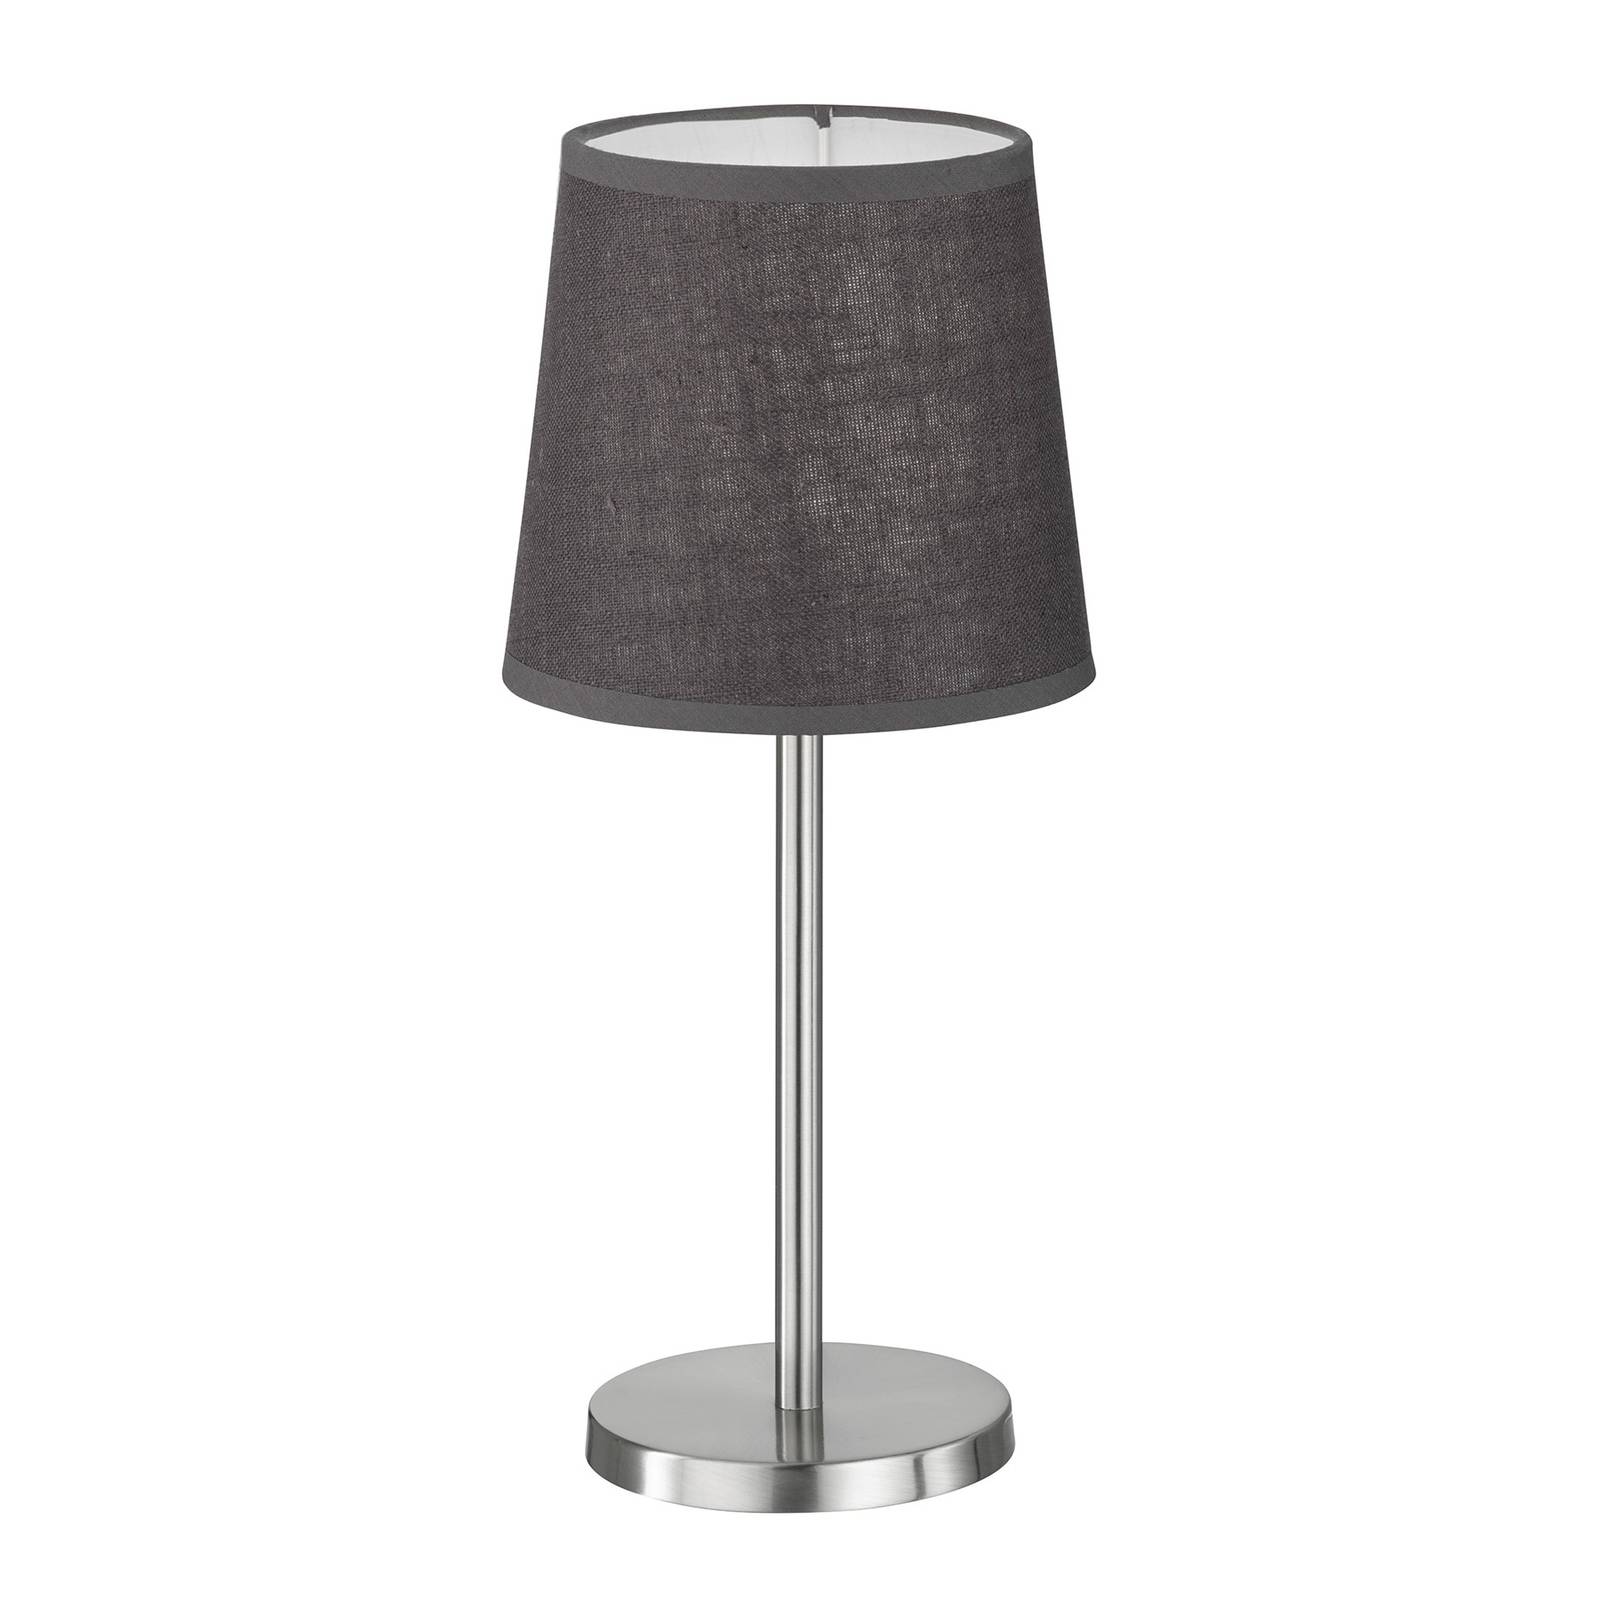 Image of Lampe à poser Eve, abat-jour tissu nickel mat/gris 4052231501029